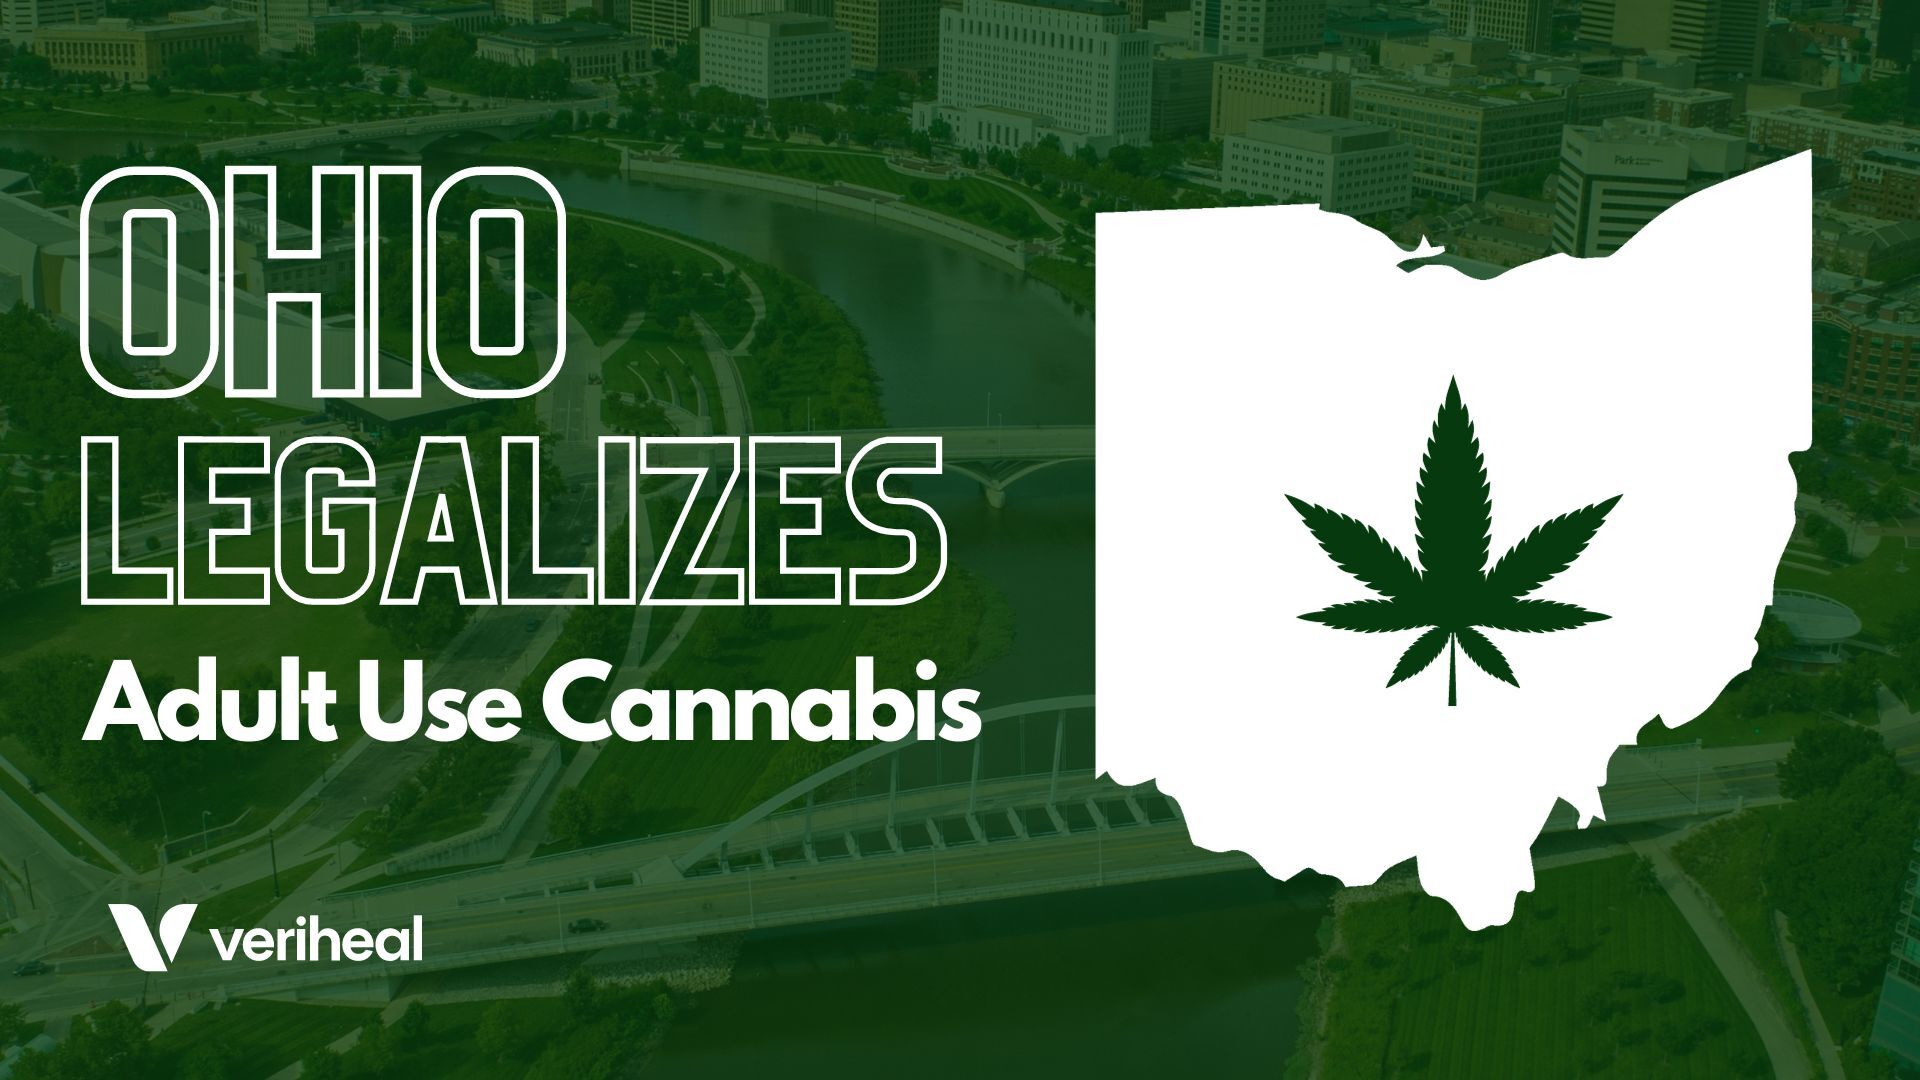 Ohio Votes To Legalize Recreational Cannabis